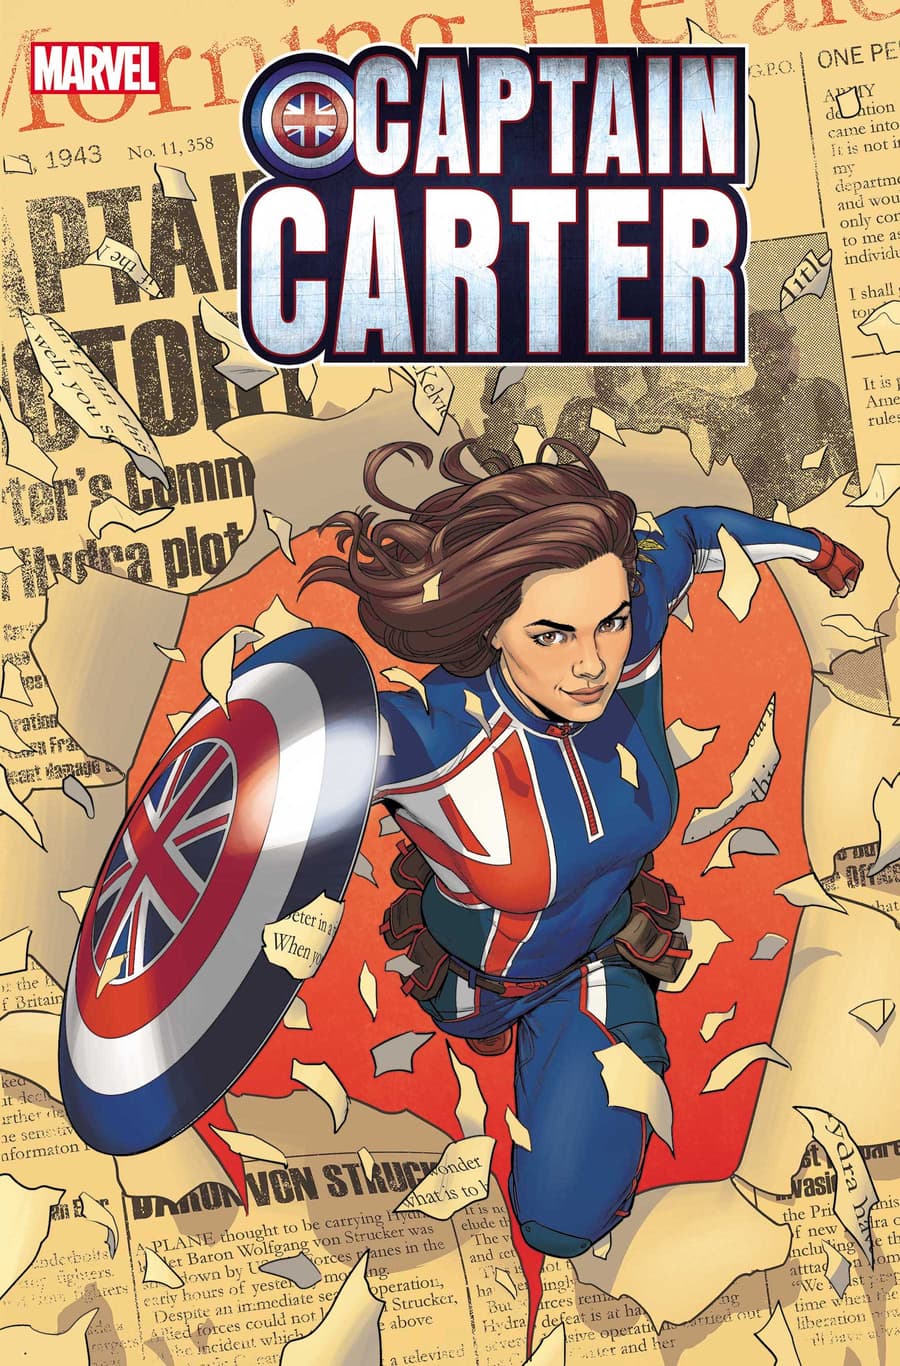 CAPTAIN CARTER #1 Cover by Jamie McKelvie